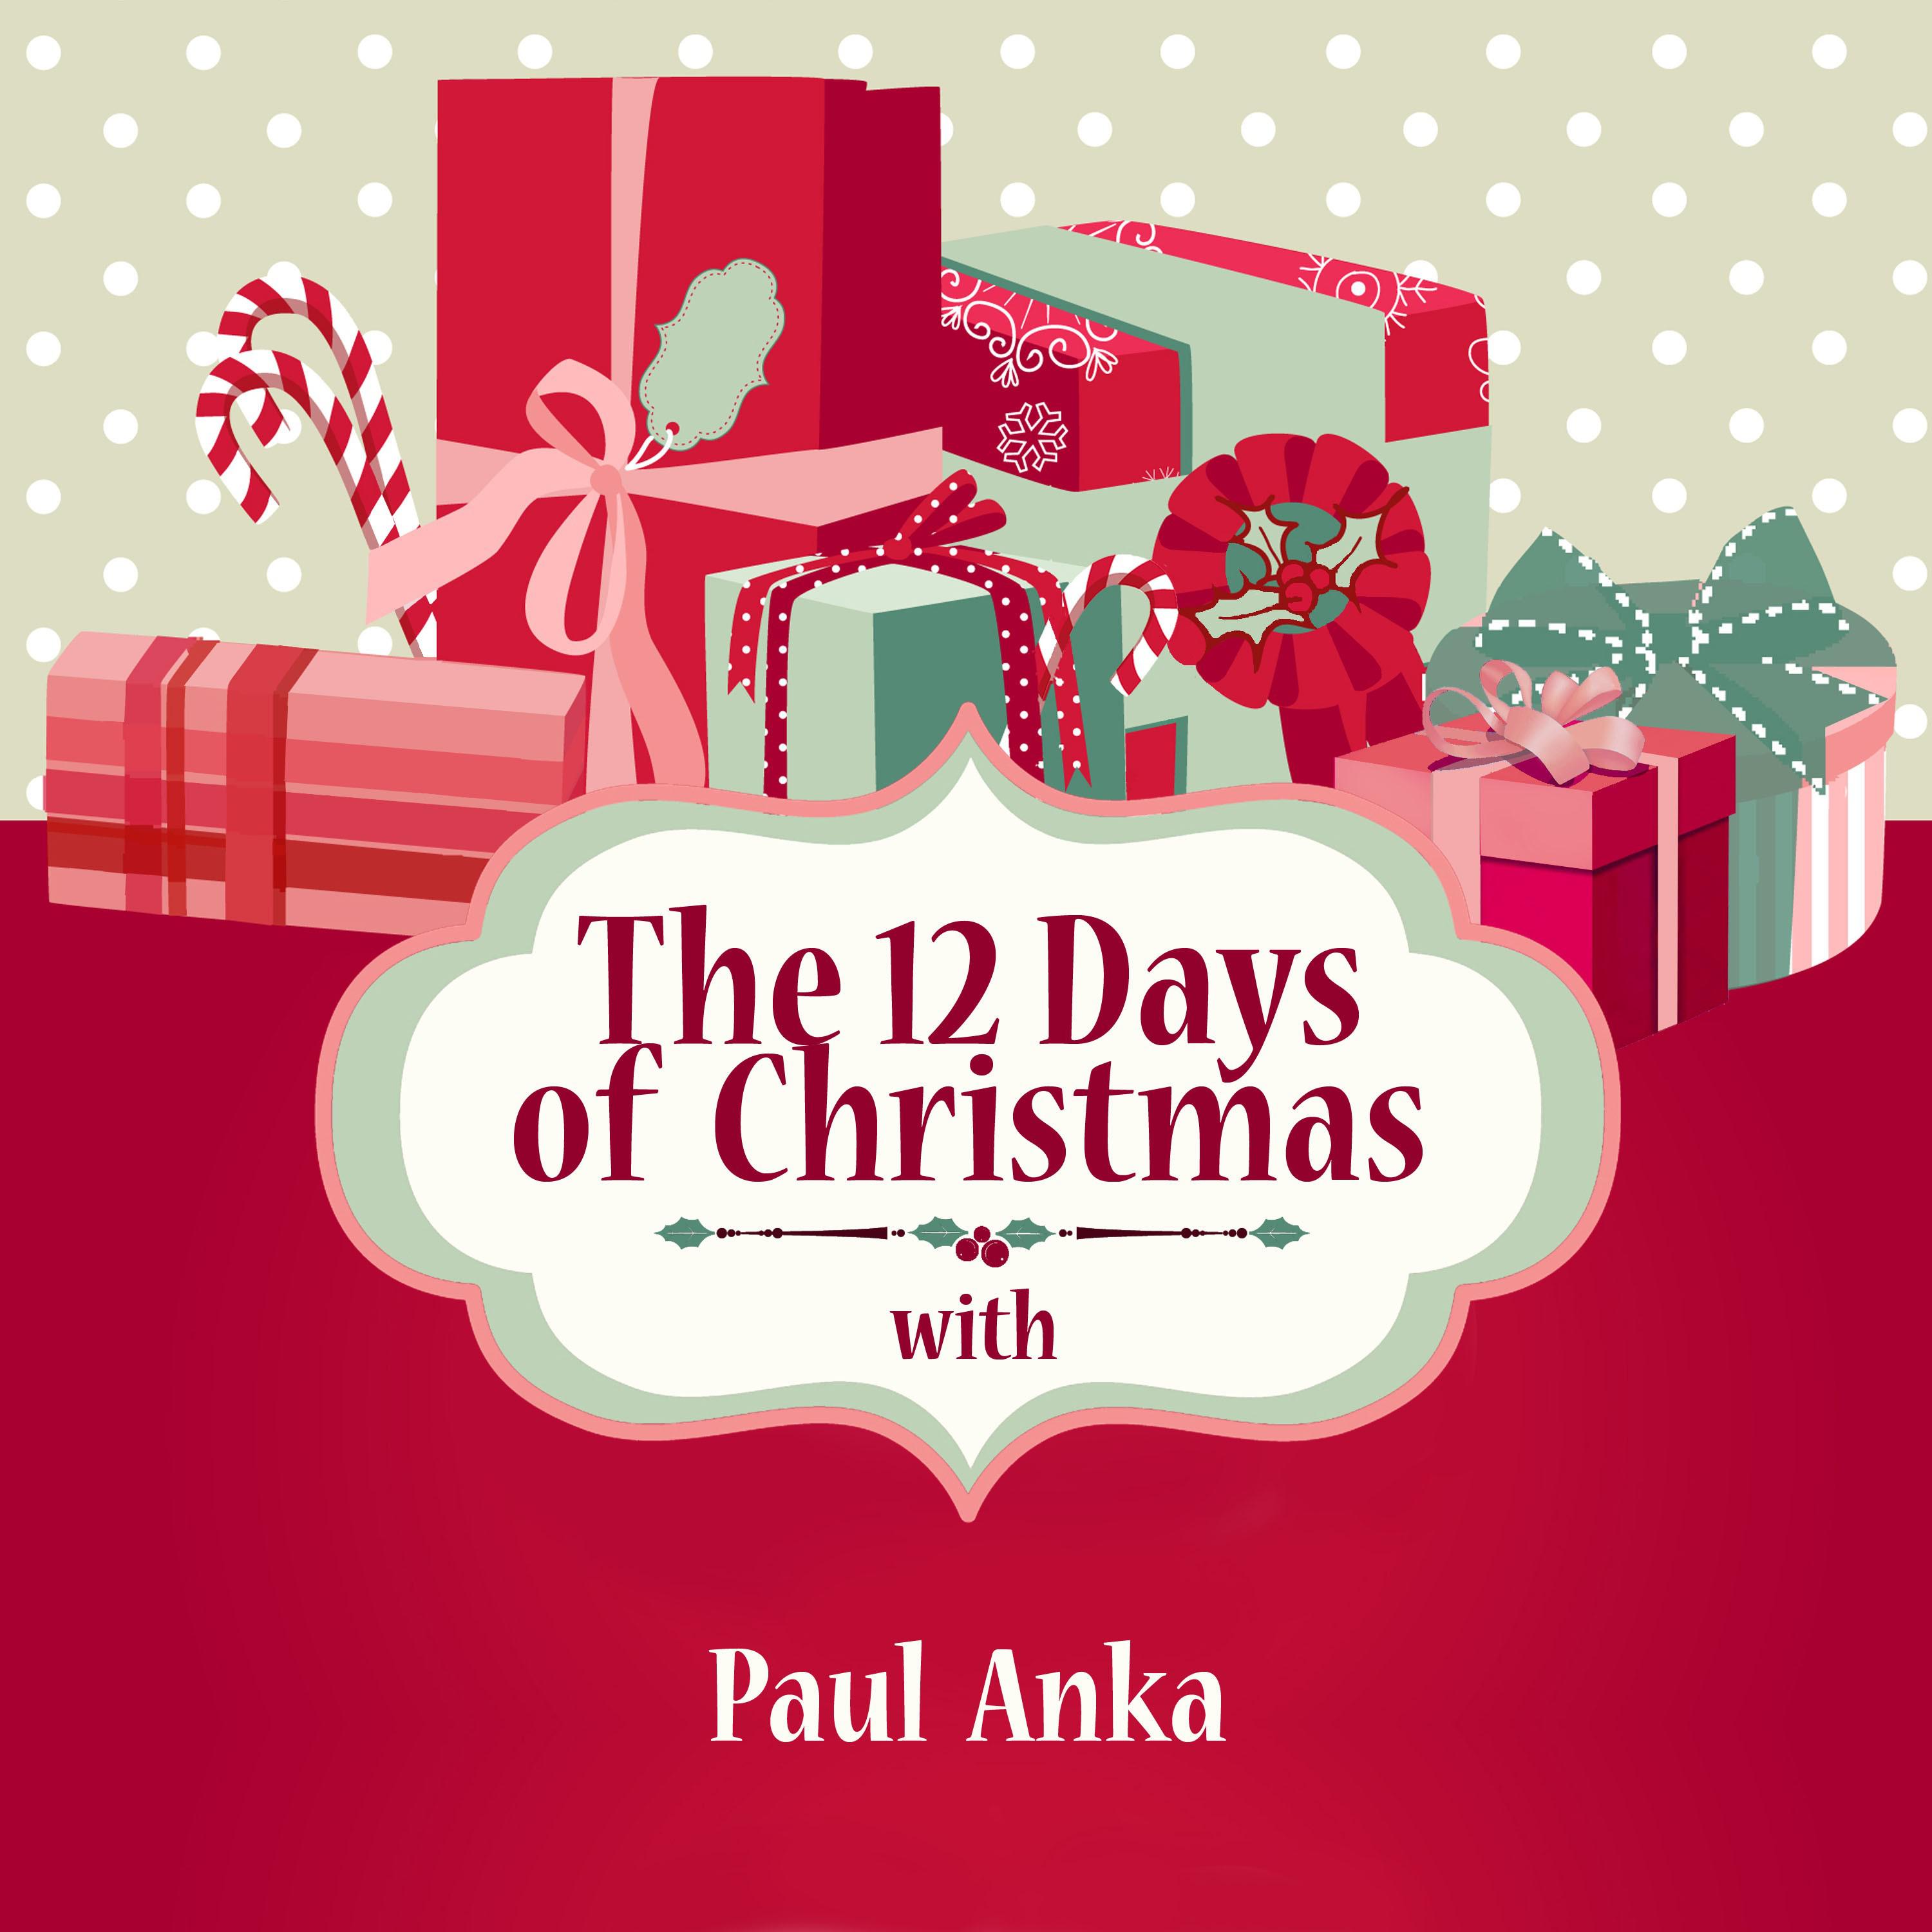 The 12 Days of Christmas with Paul Anka